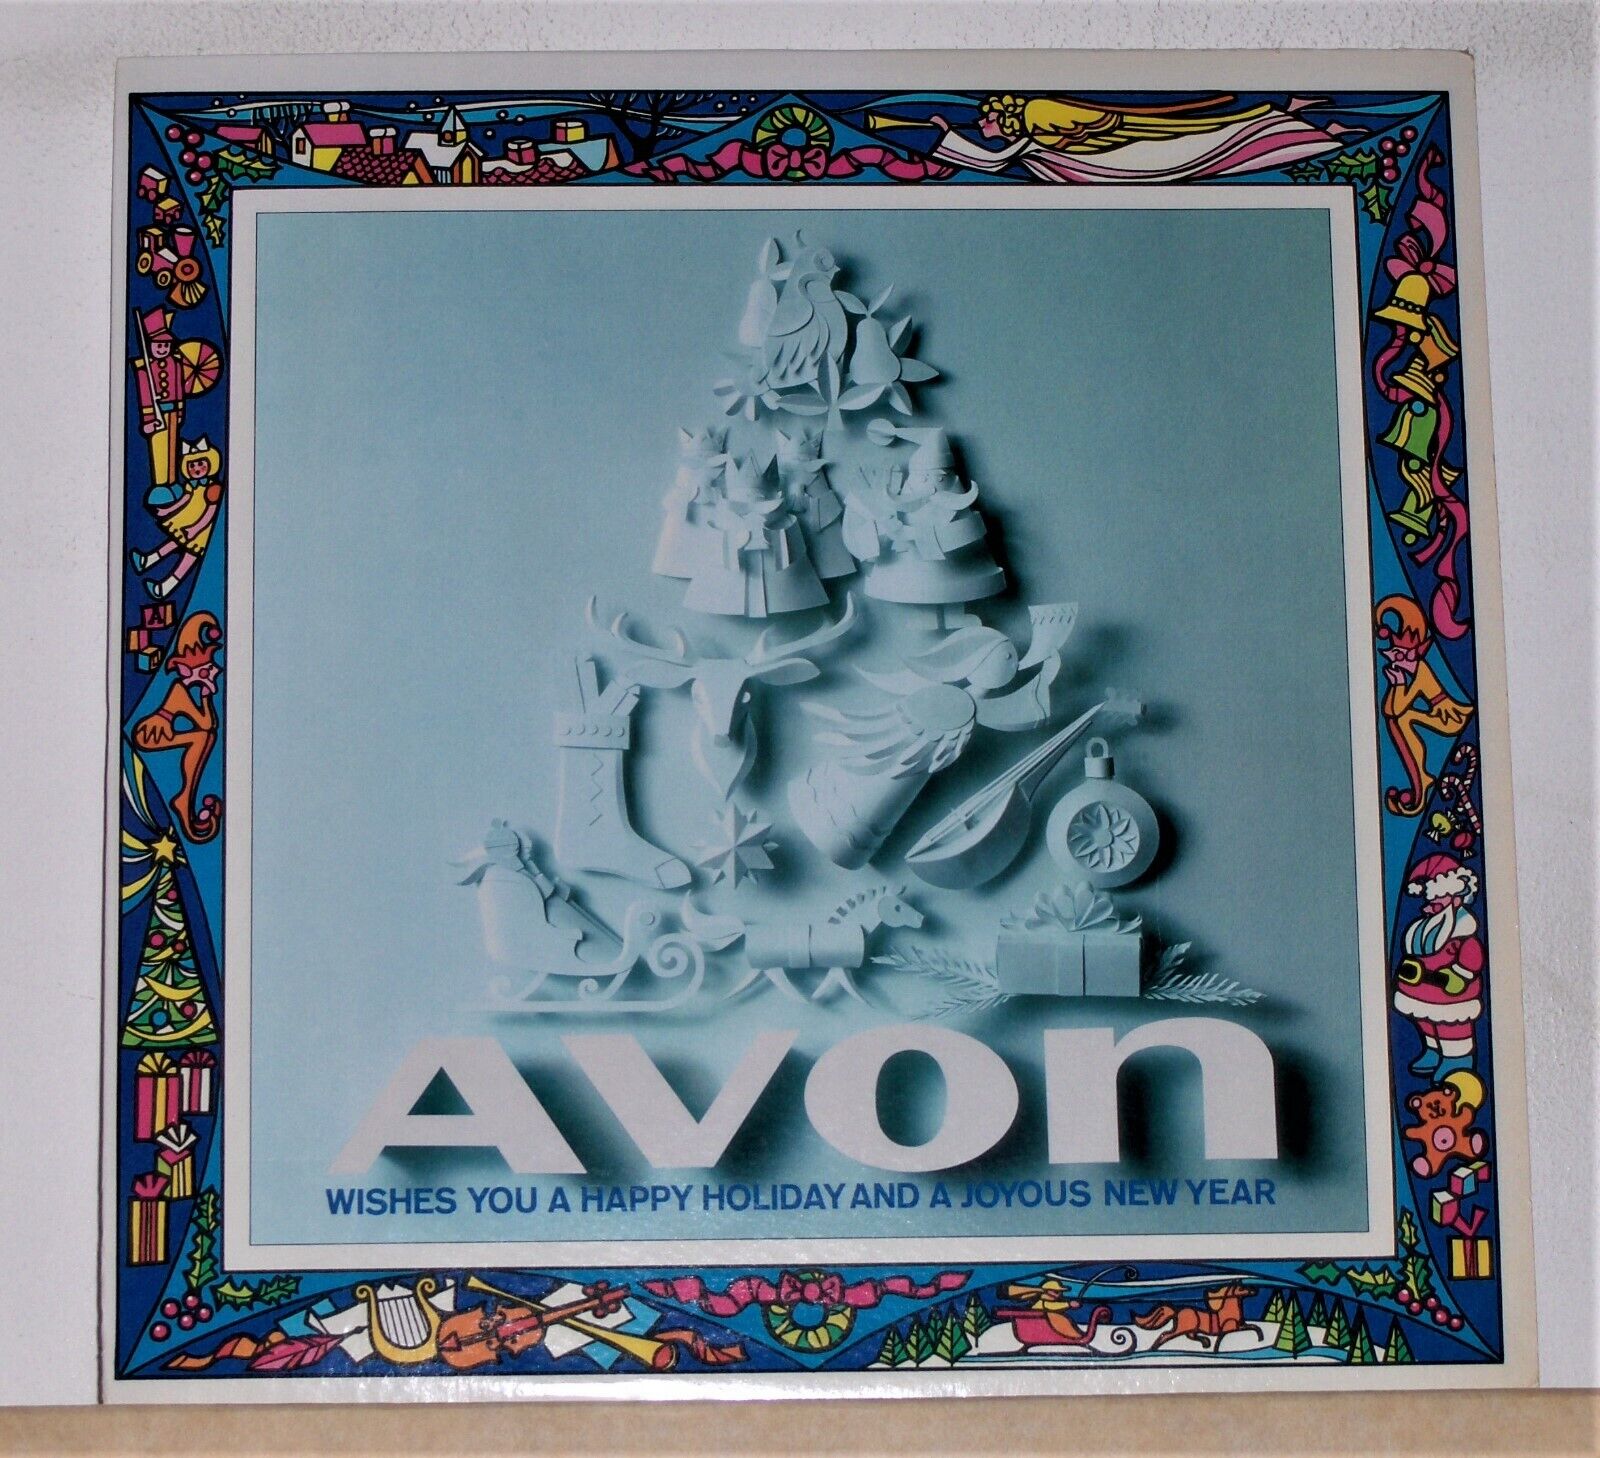  Avon Wishes You A Happy Holiday - Longines Symphonette - Vinyl LP Record Album